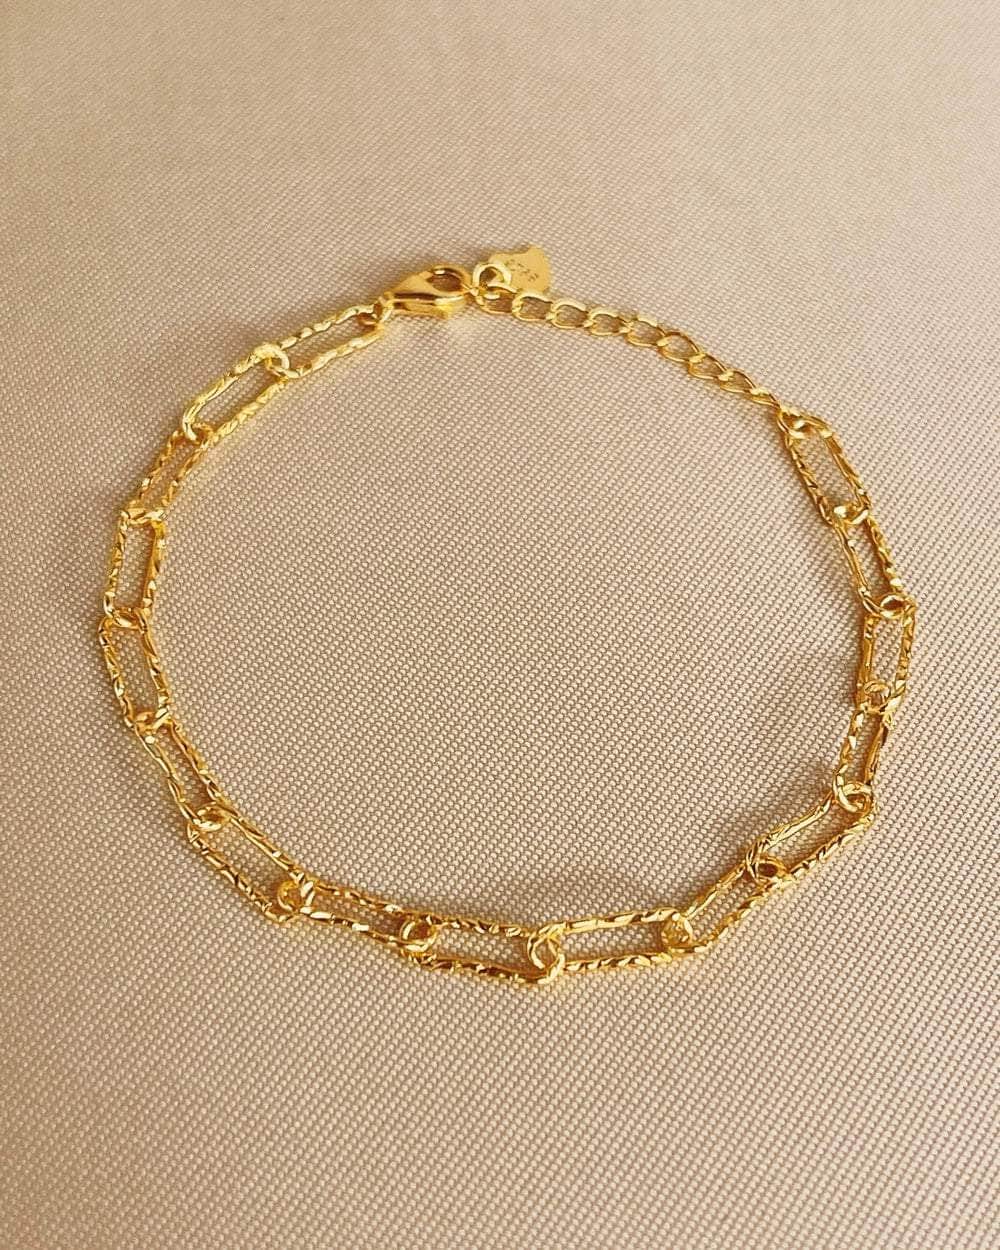 So Dainty Co. Bracelets Quinn Gold Bracelet Gold Plated 925 Sterling Silver Jewelry